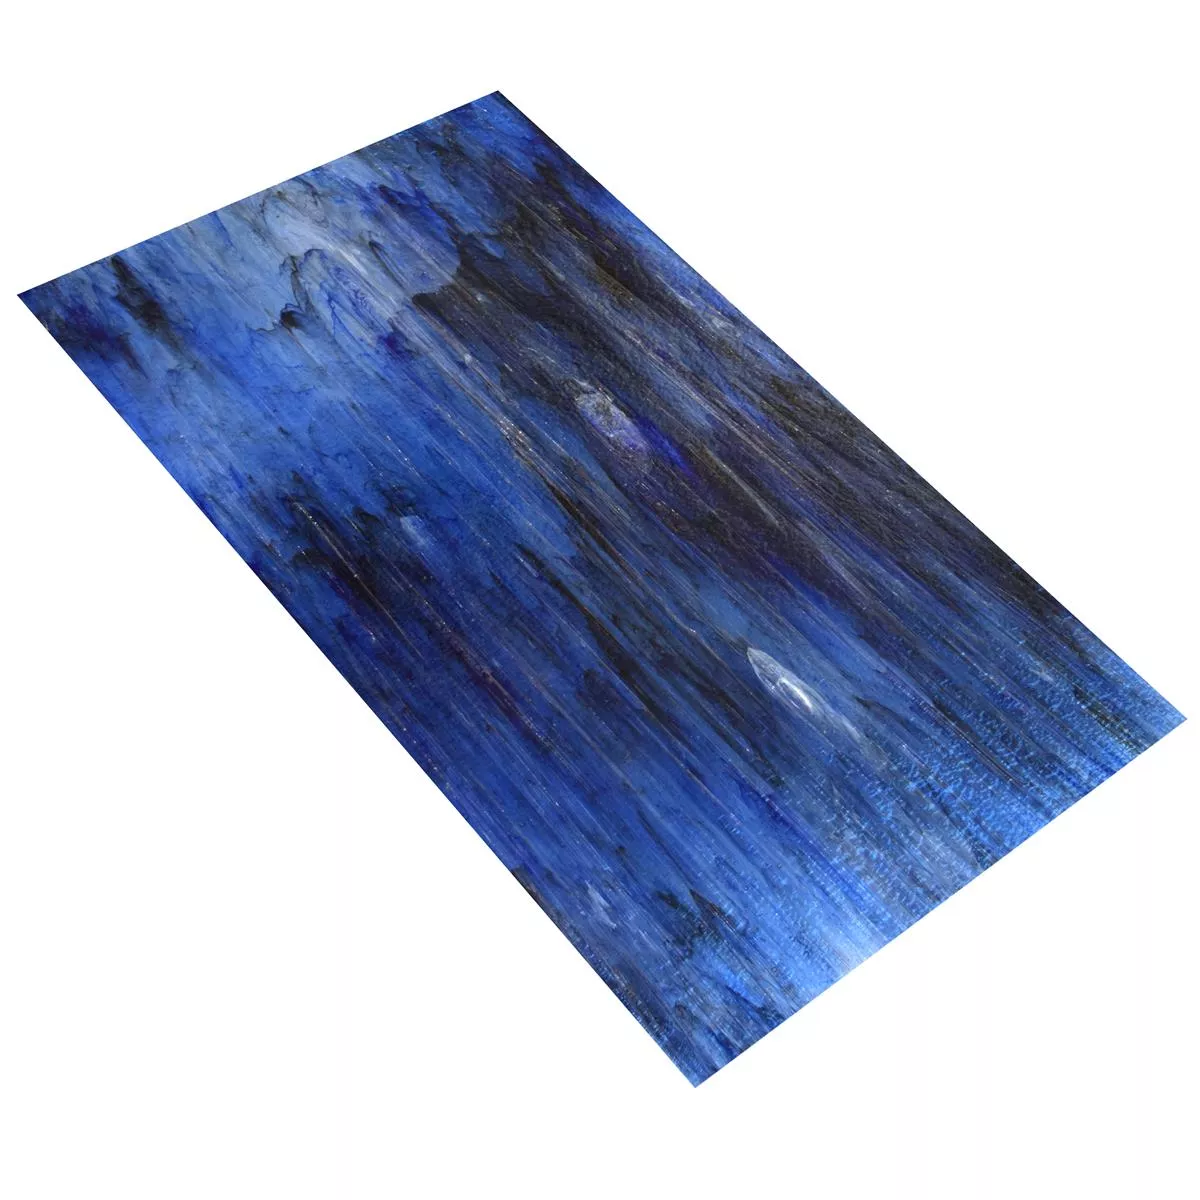 Vidro Azulejos Trend-Vi Supreme Galaxy Blue 30x60cm